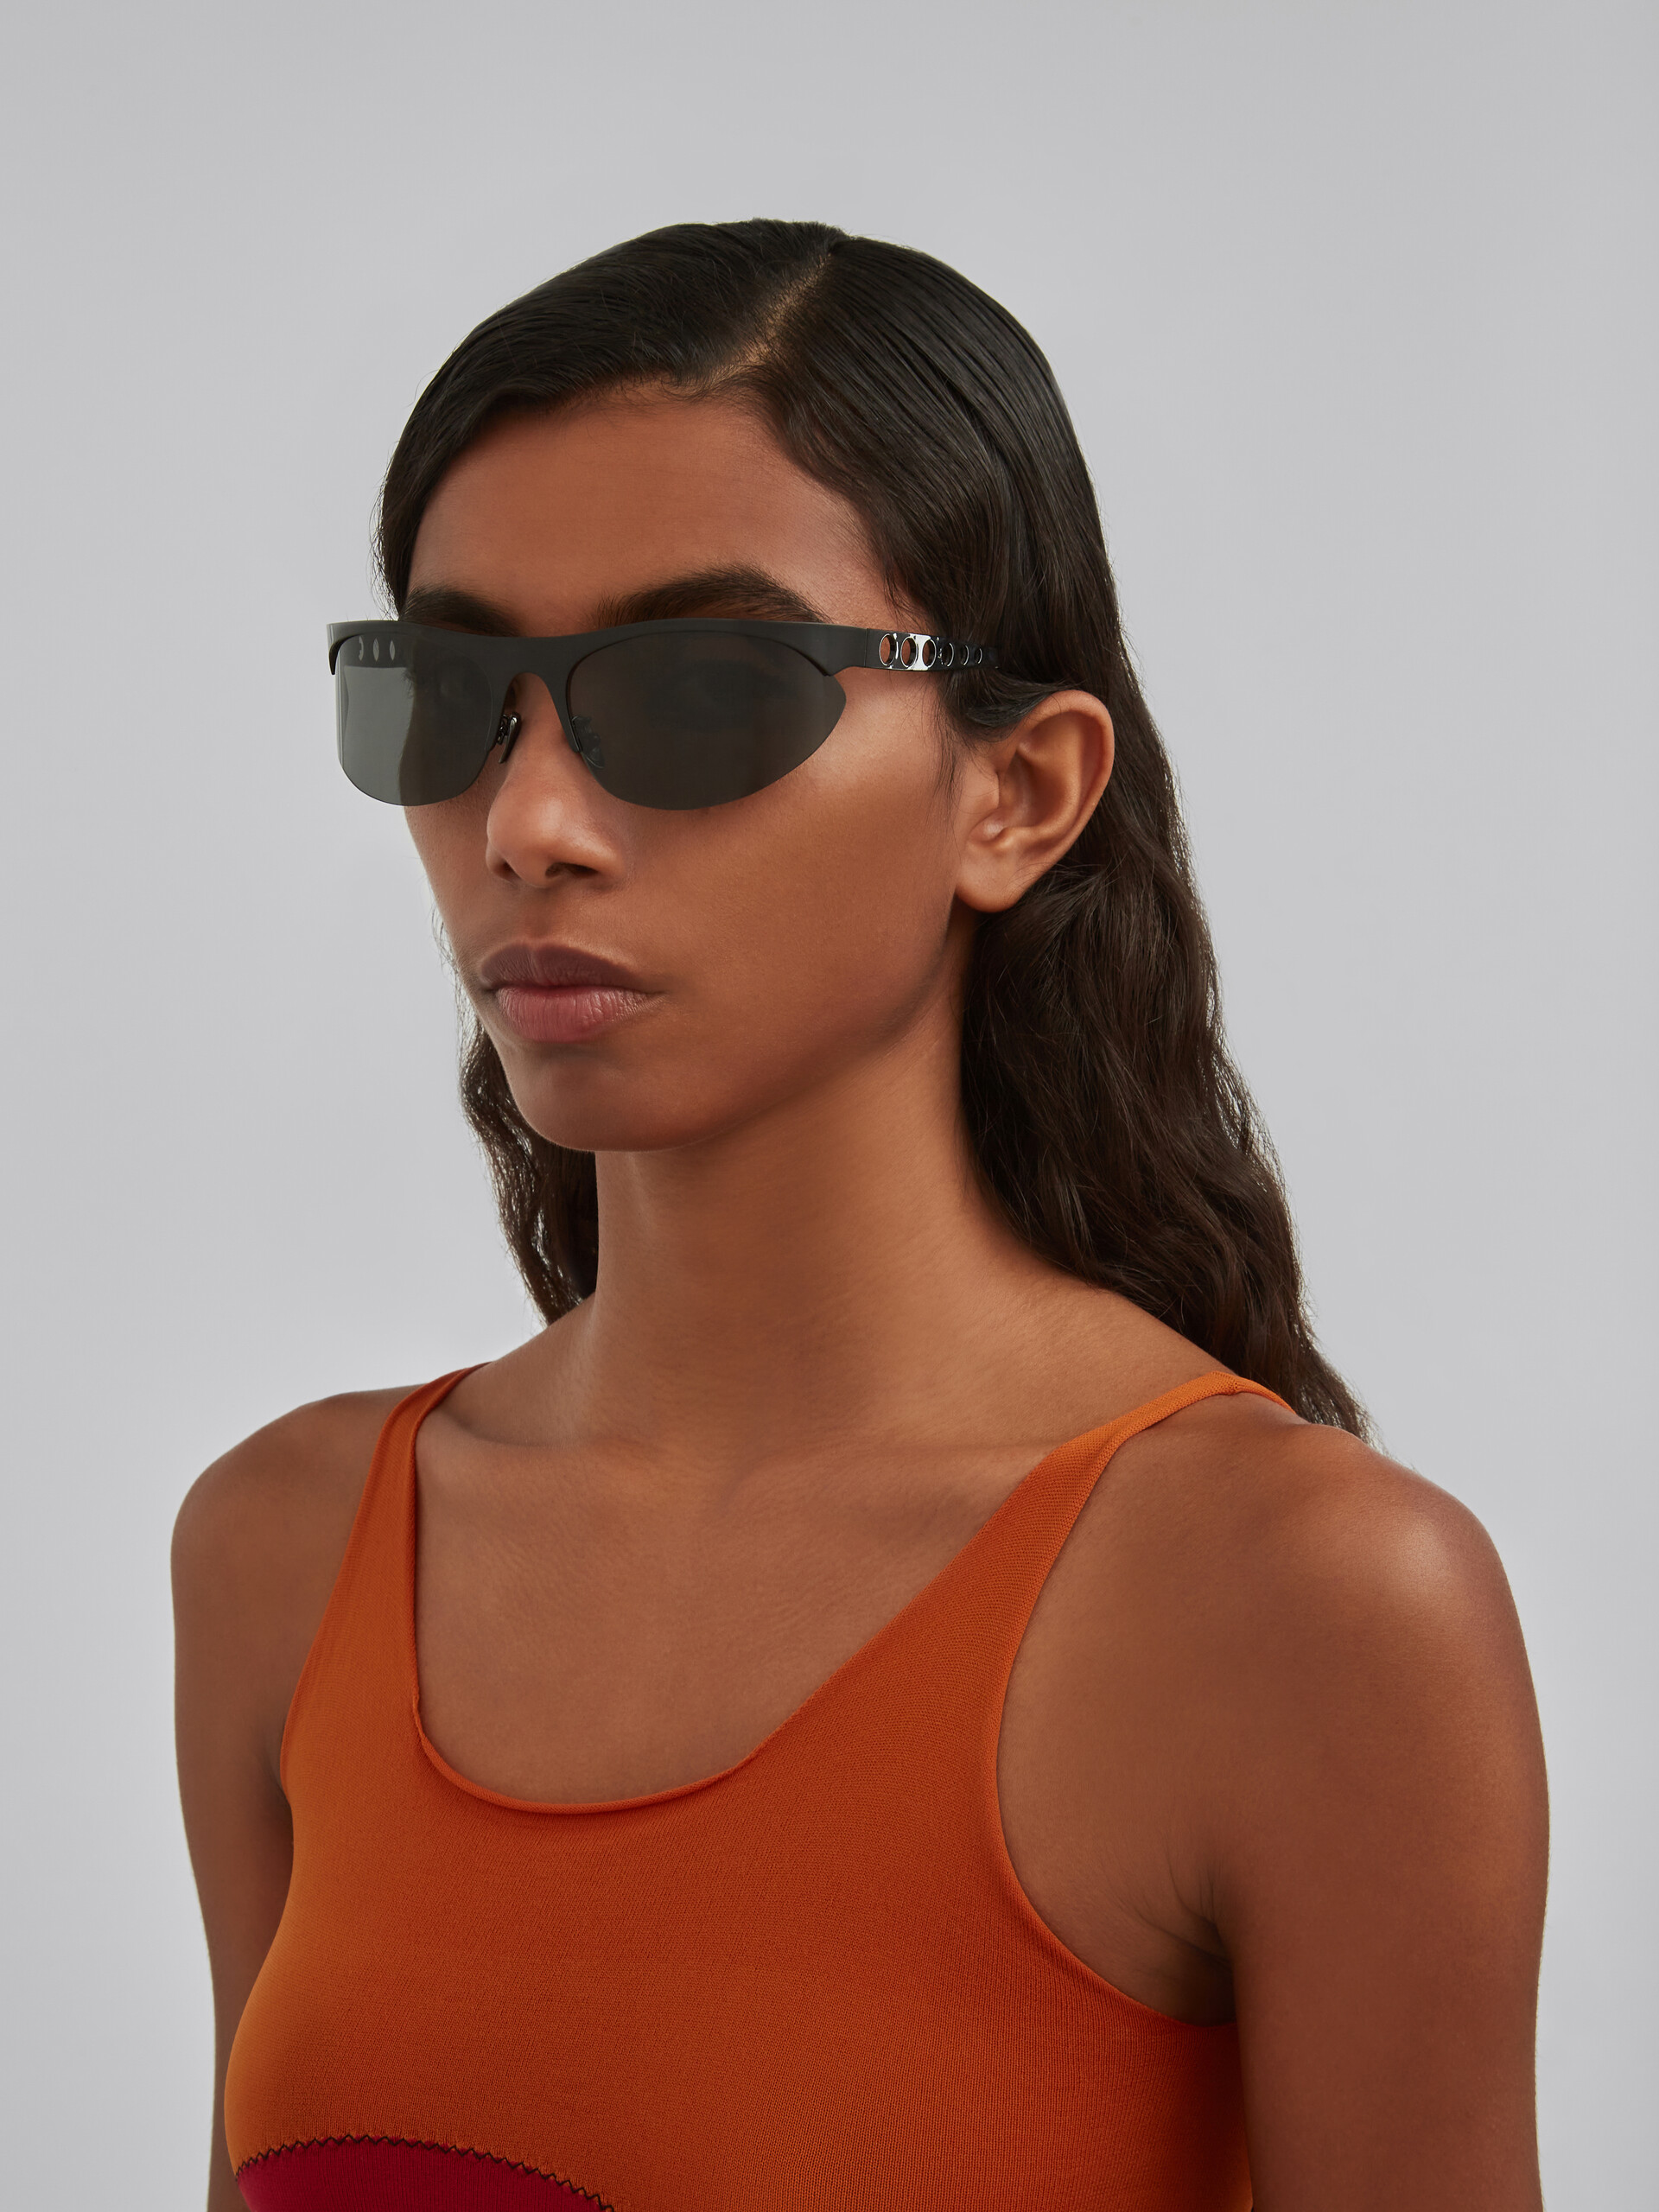 Black Salar De Uyuni metal sunglasses - Optical - Image 2